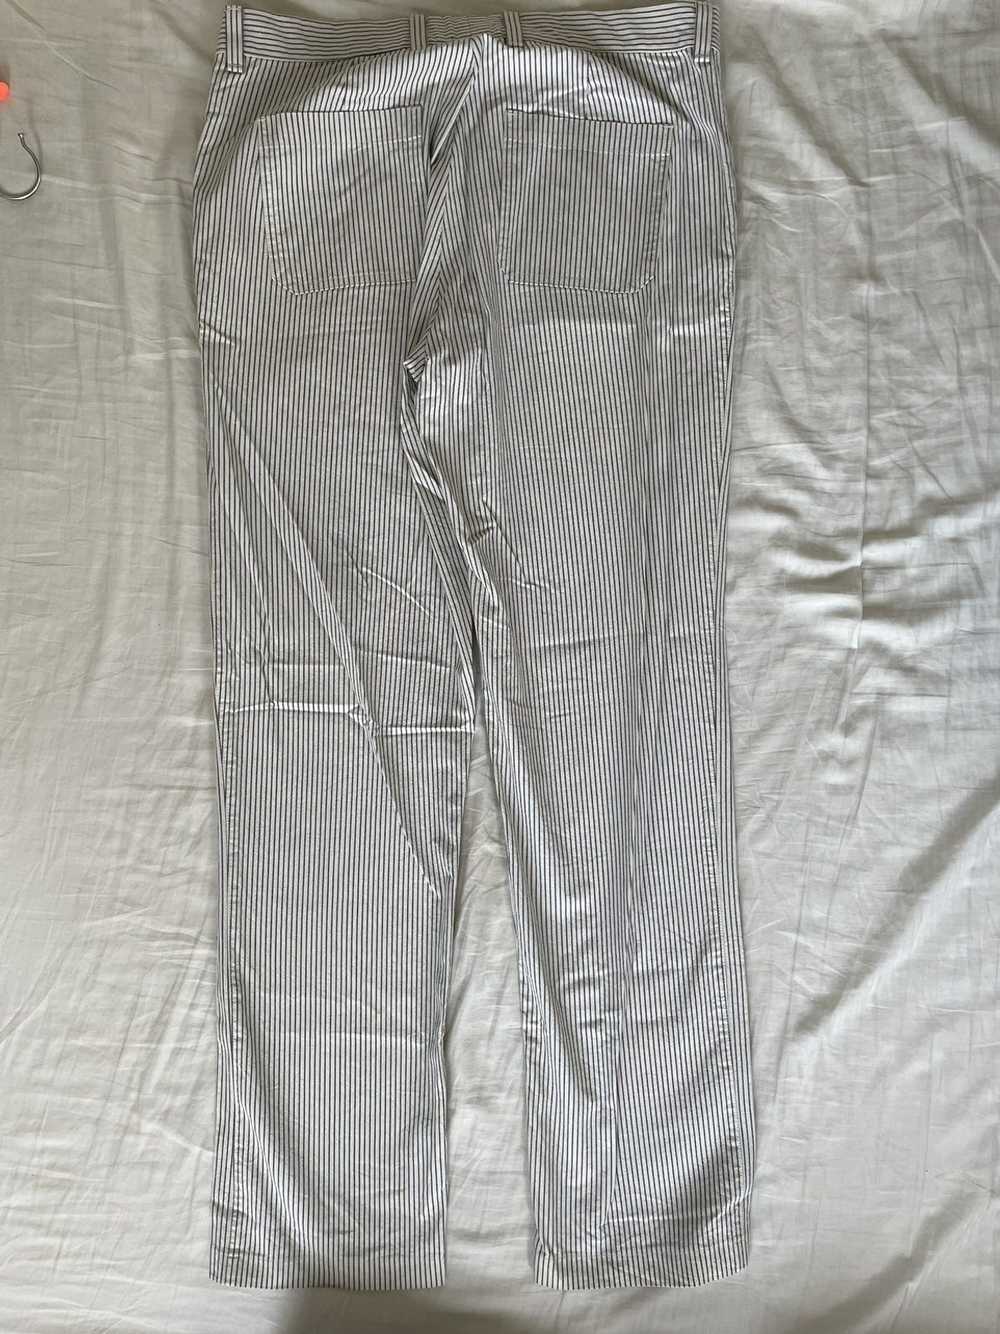 American Apparel Striped Pants - image 4